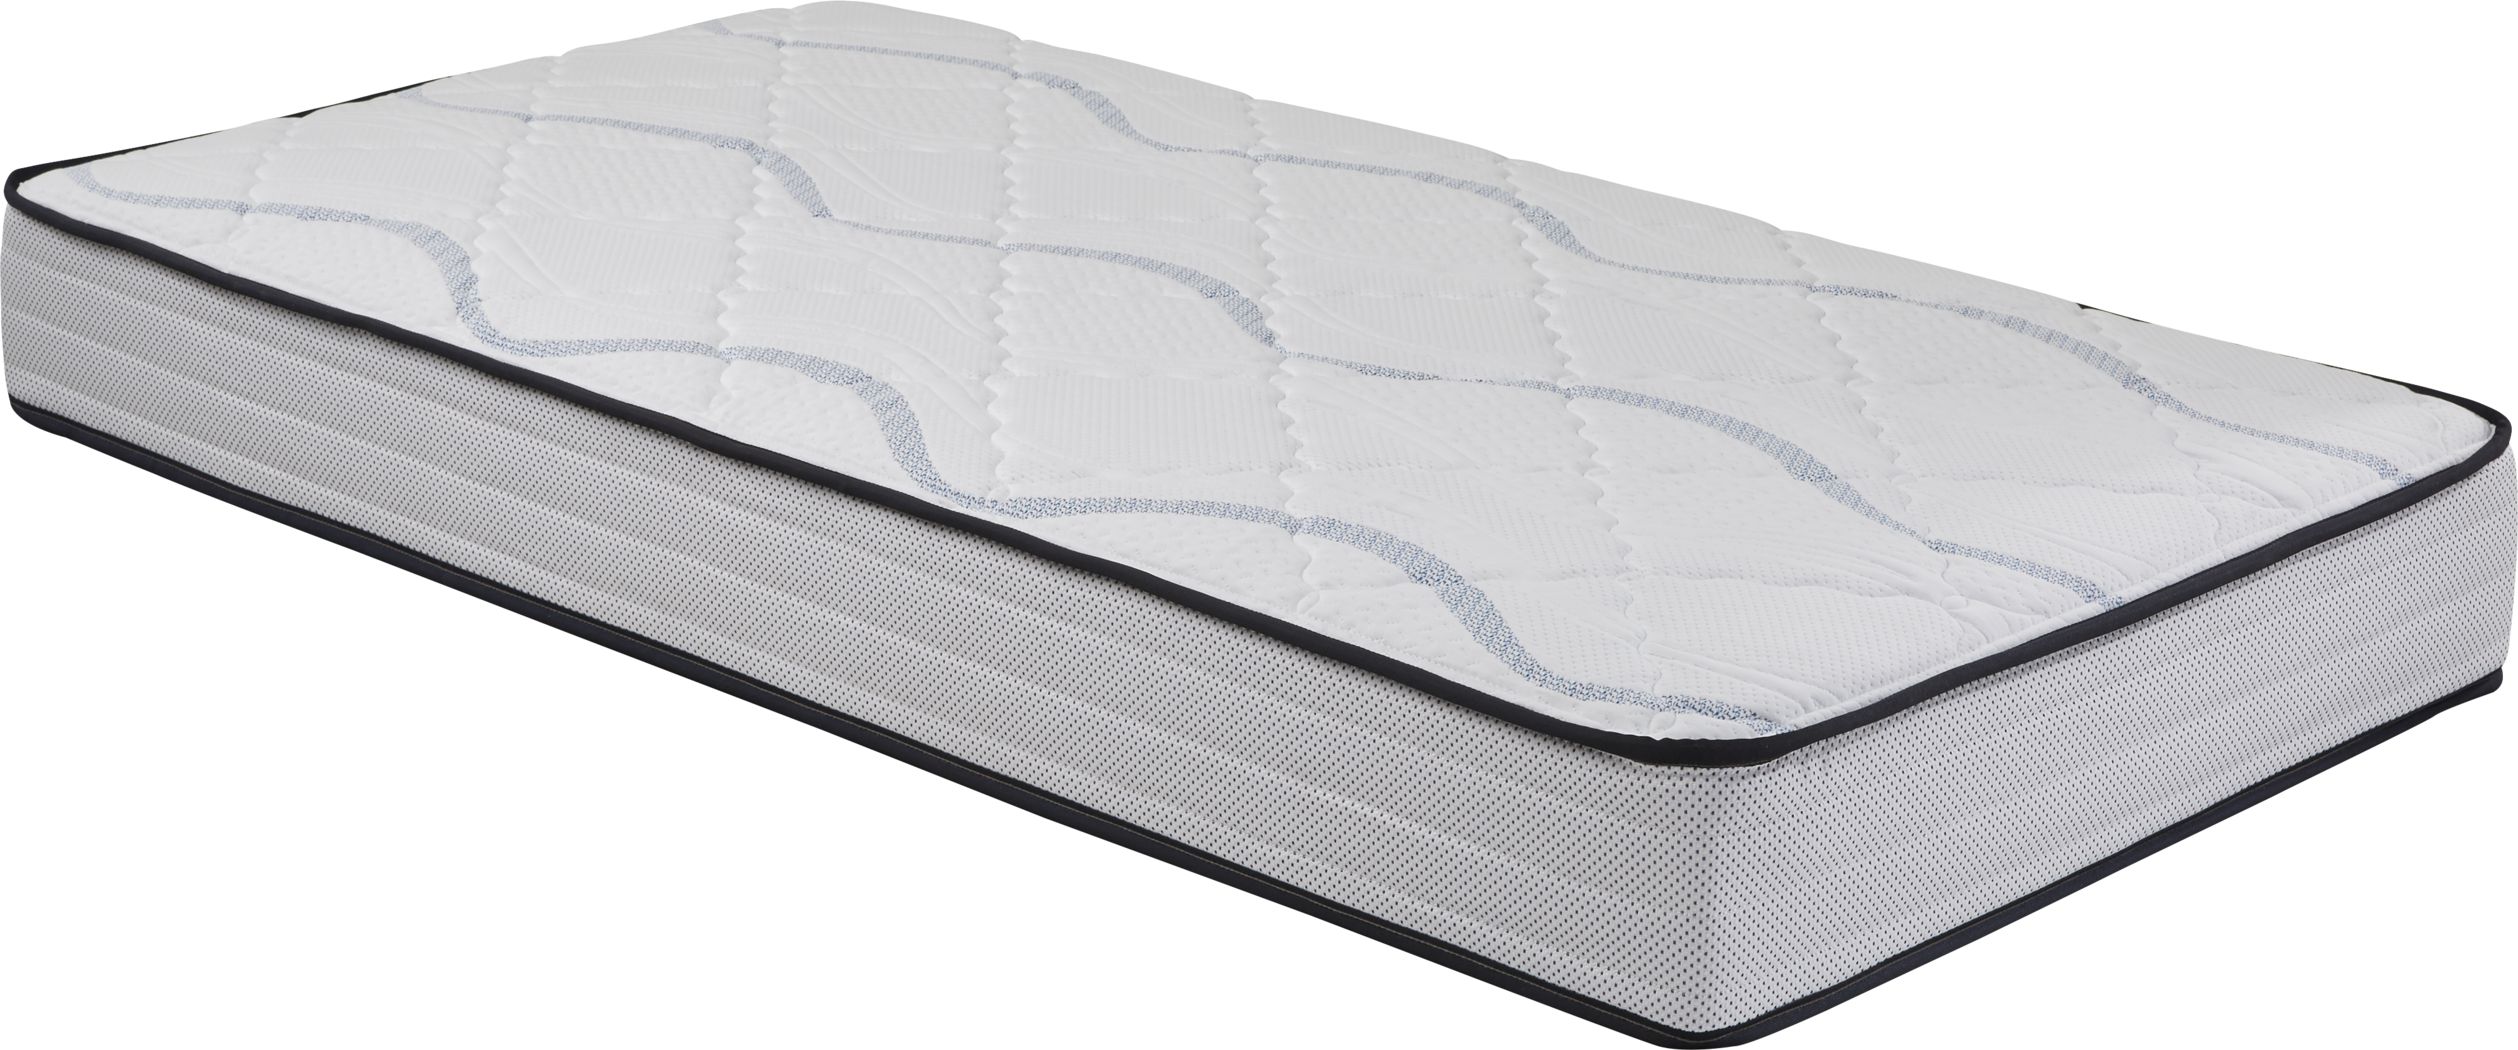 7 foam mattress twin